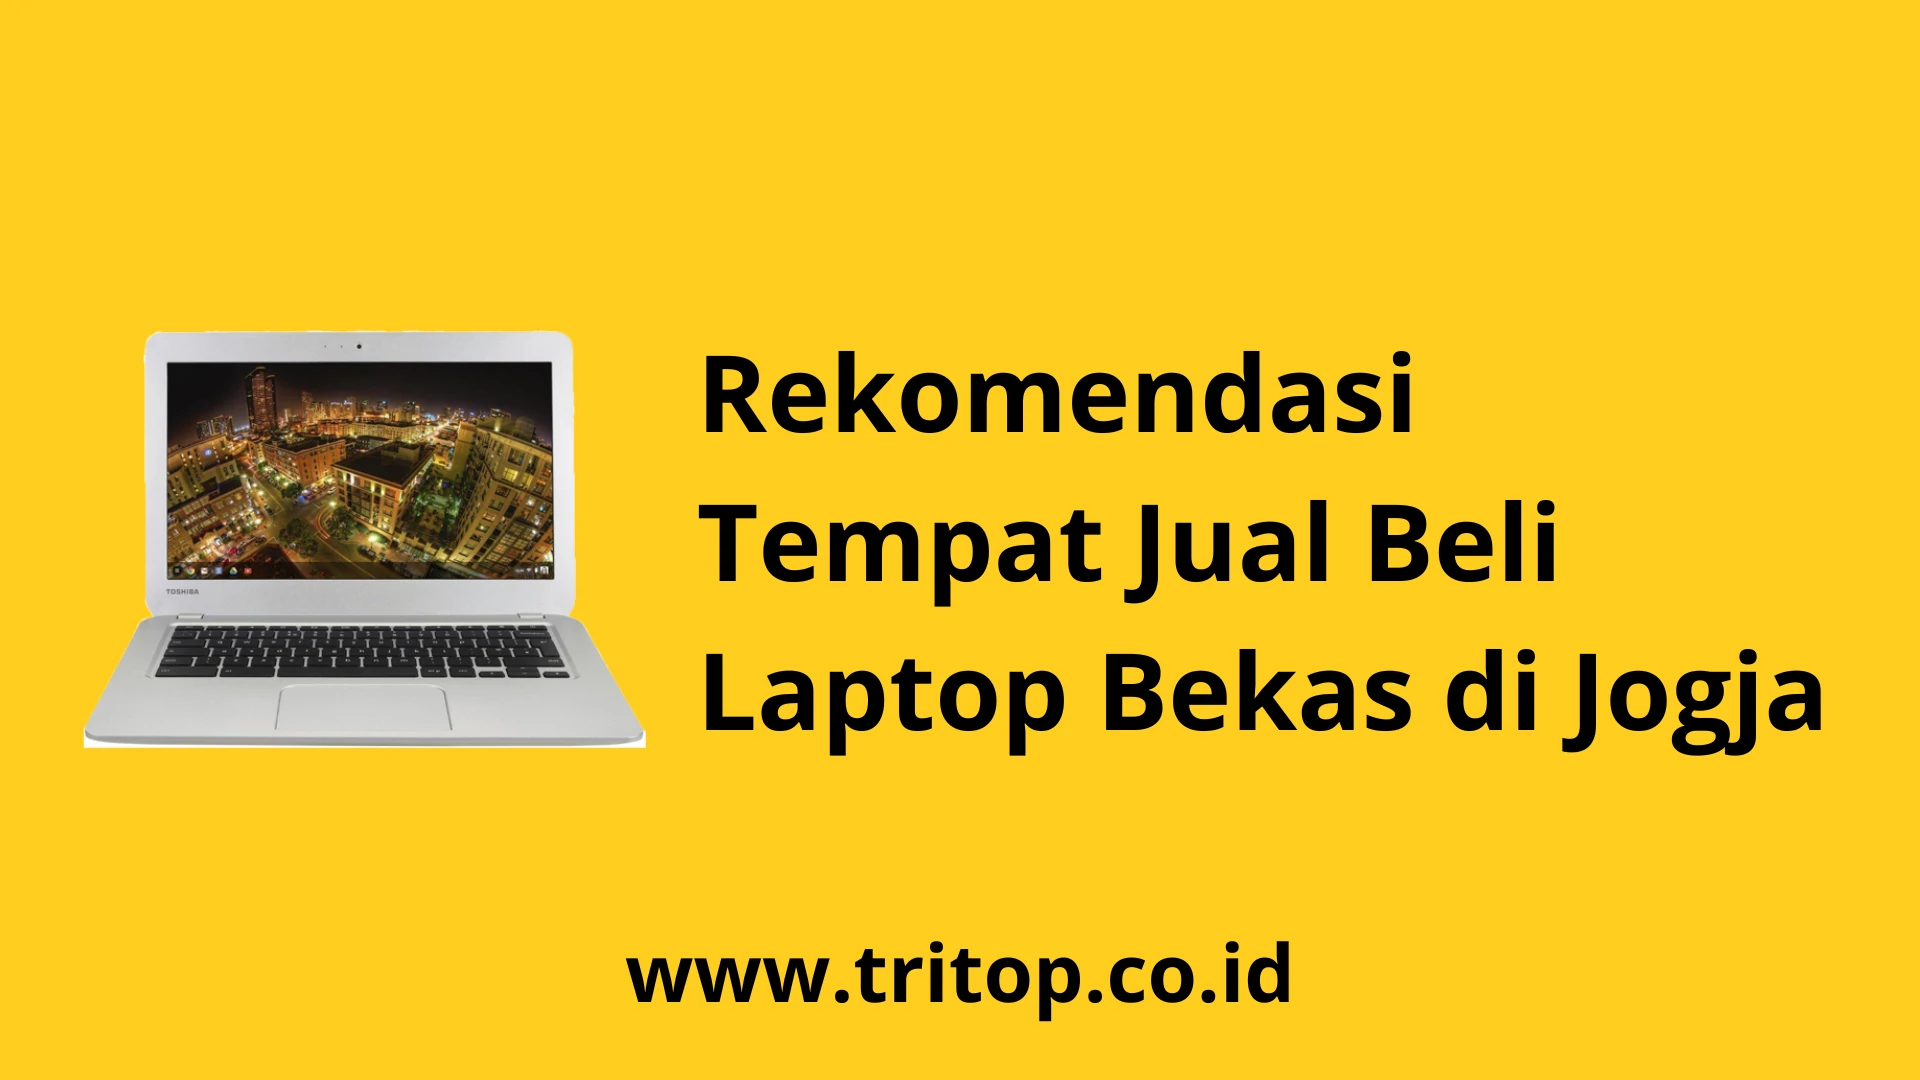 Tempat Jual Beli Laptop Bekas di Jogja Tritop.co.id